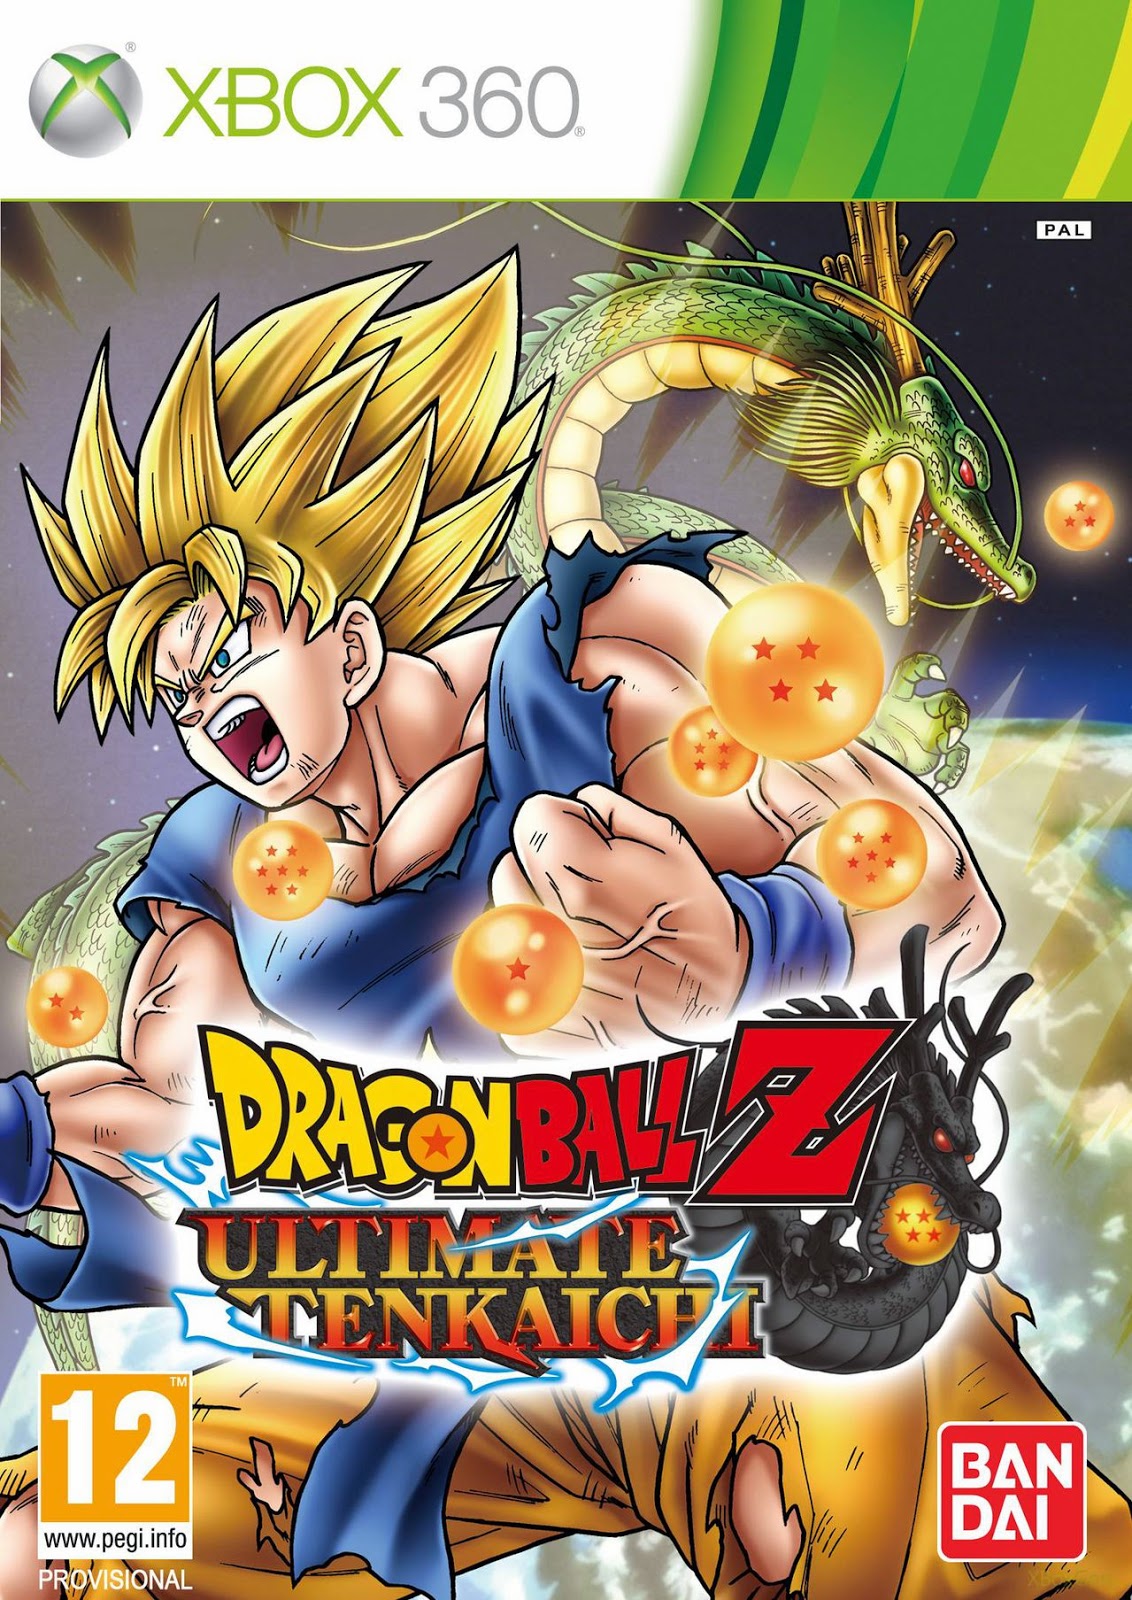 Dragonball Z Ultimate Tenkaichi Xbox360 free download full version